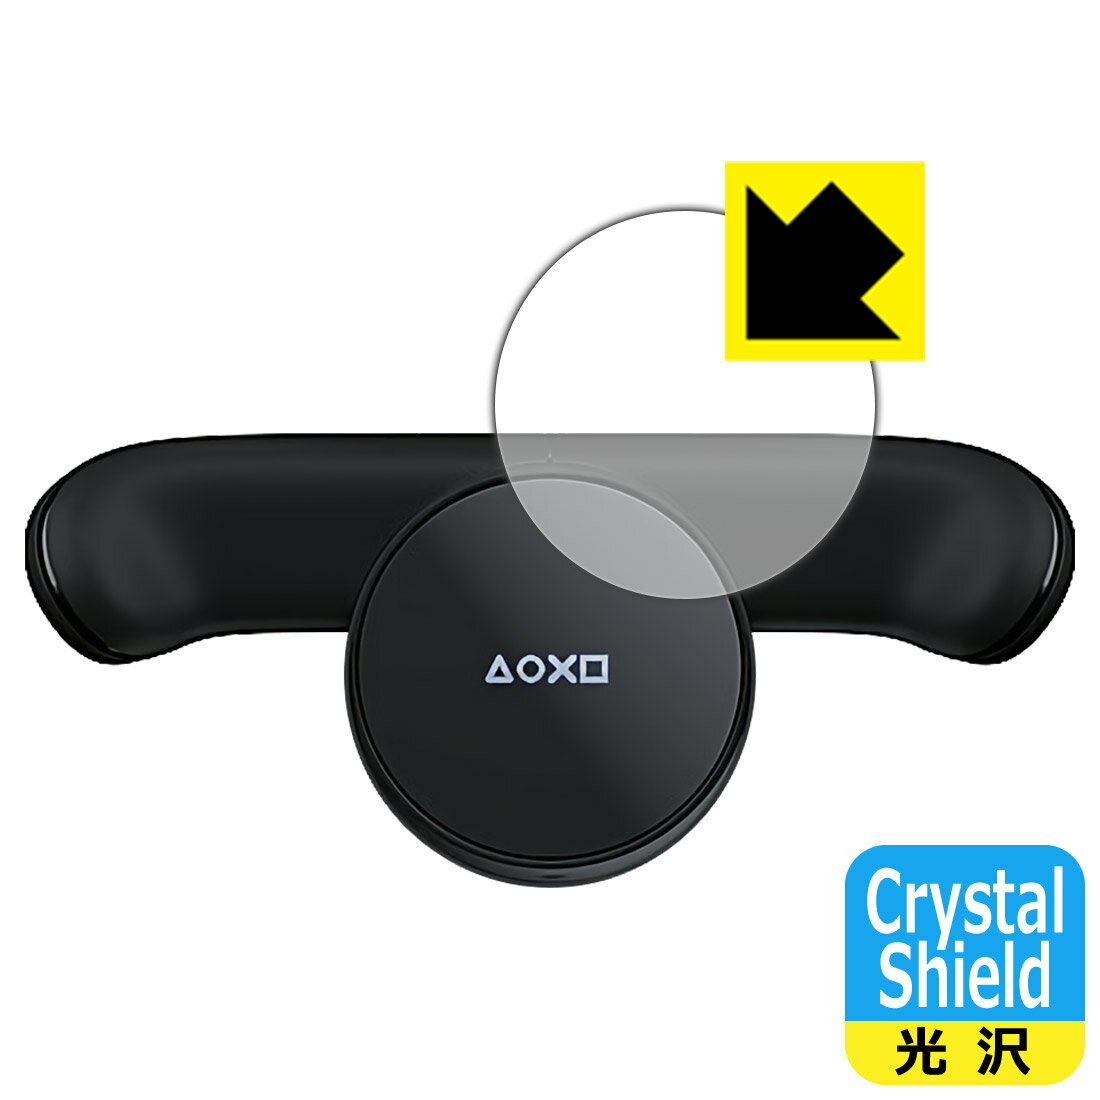 Crystal Shield DUALSHOCK 4 背面ボタンアタッチメント 用 液晶保護フィルム 日本製 自社製造直販